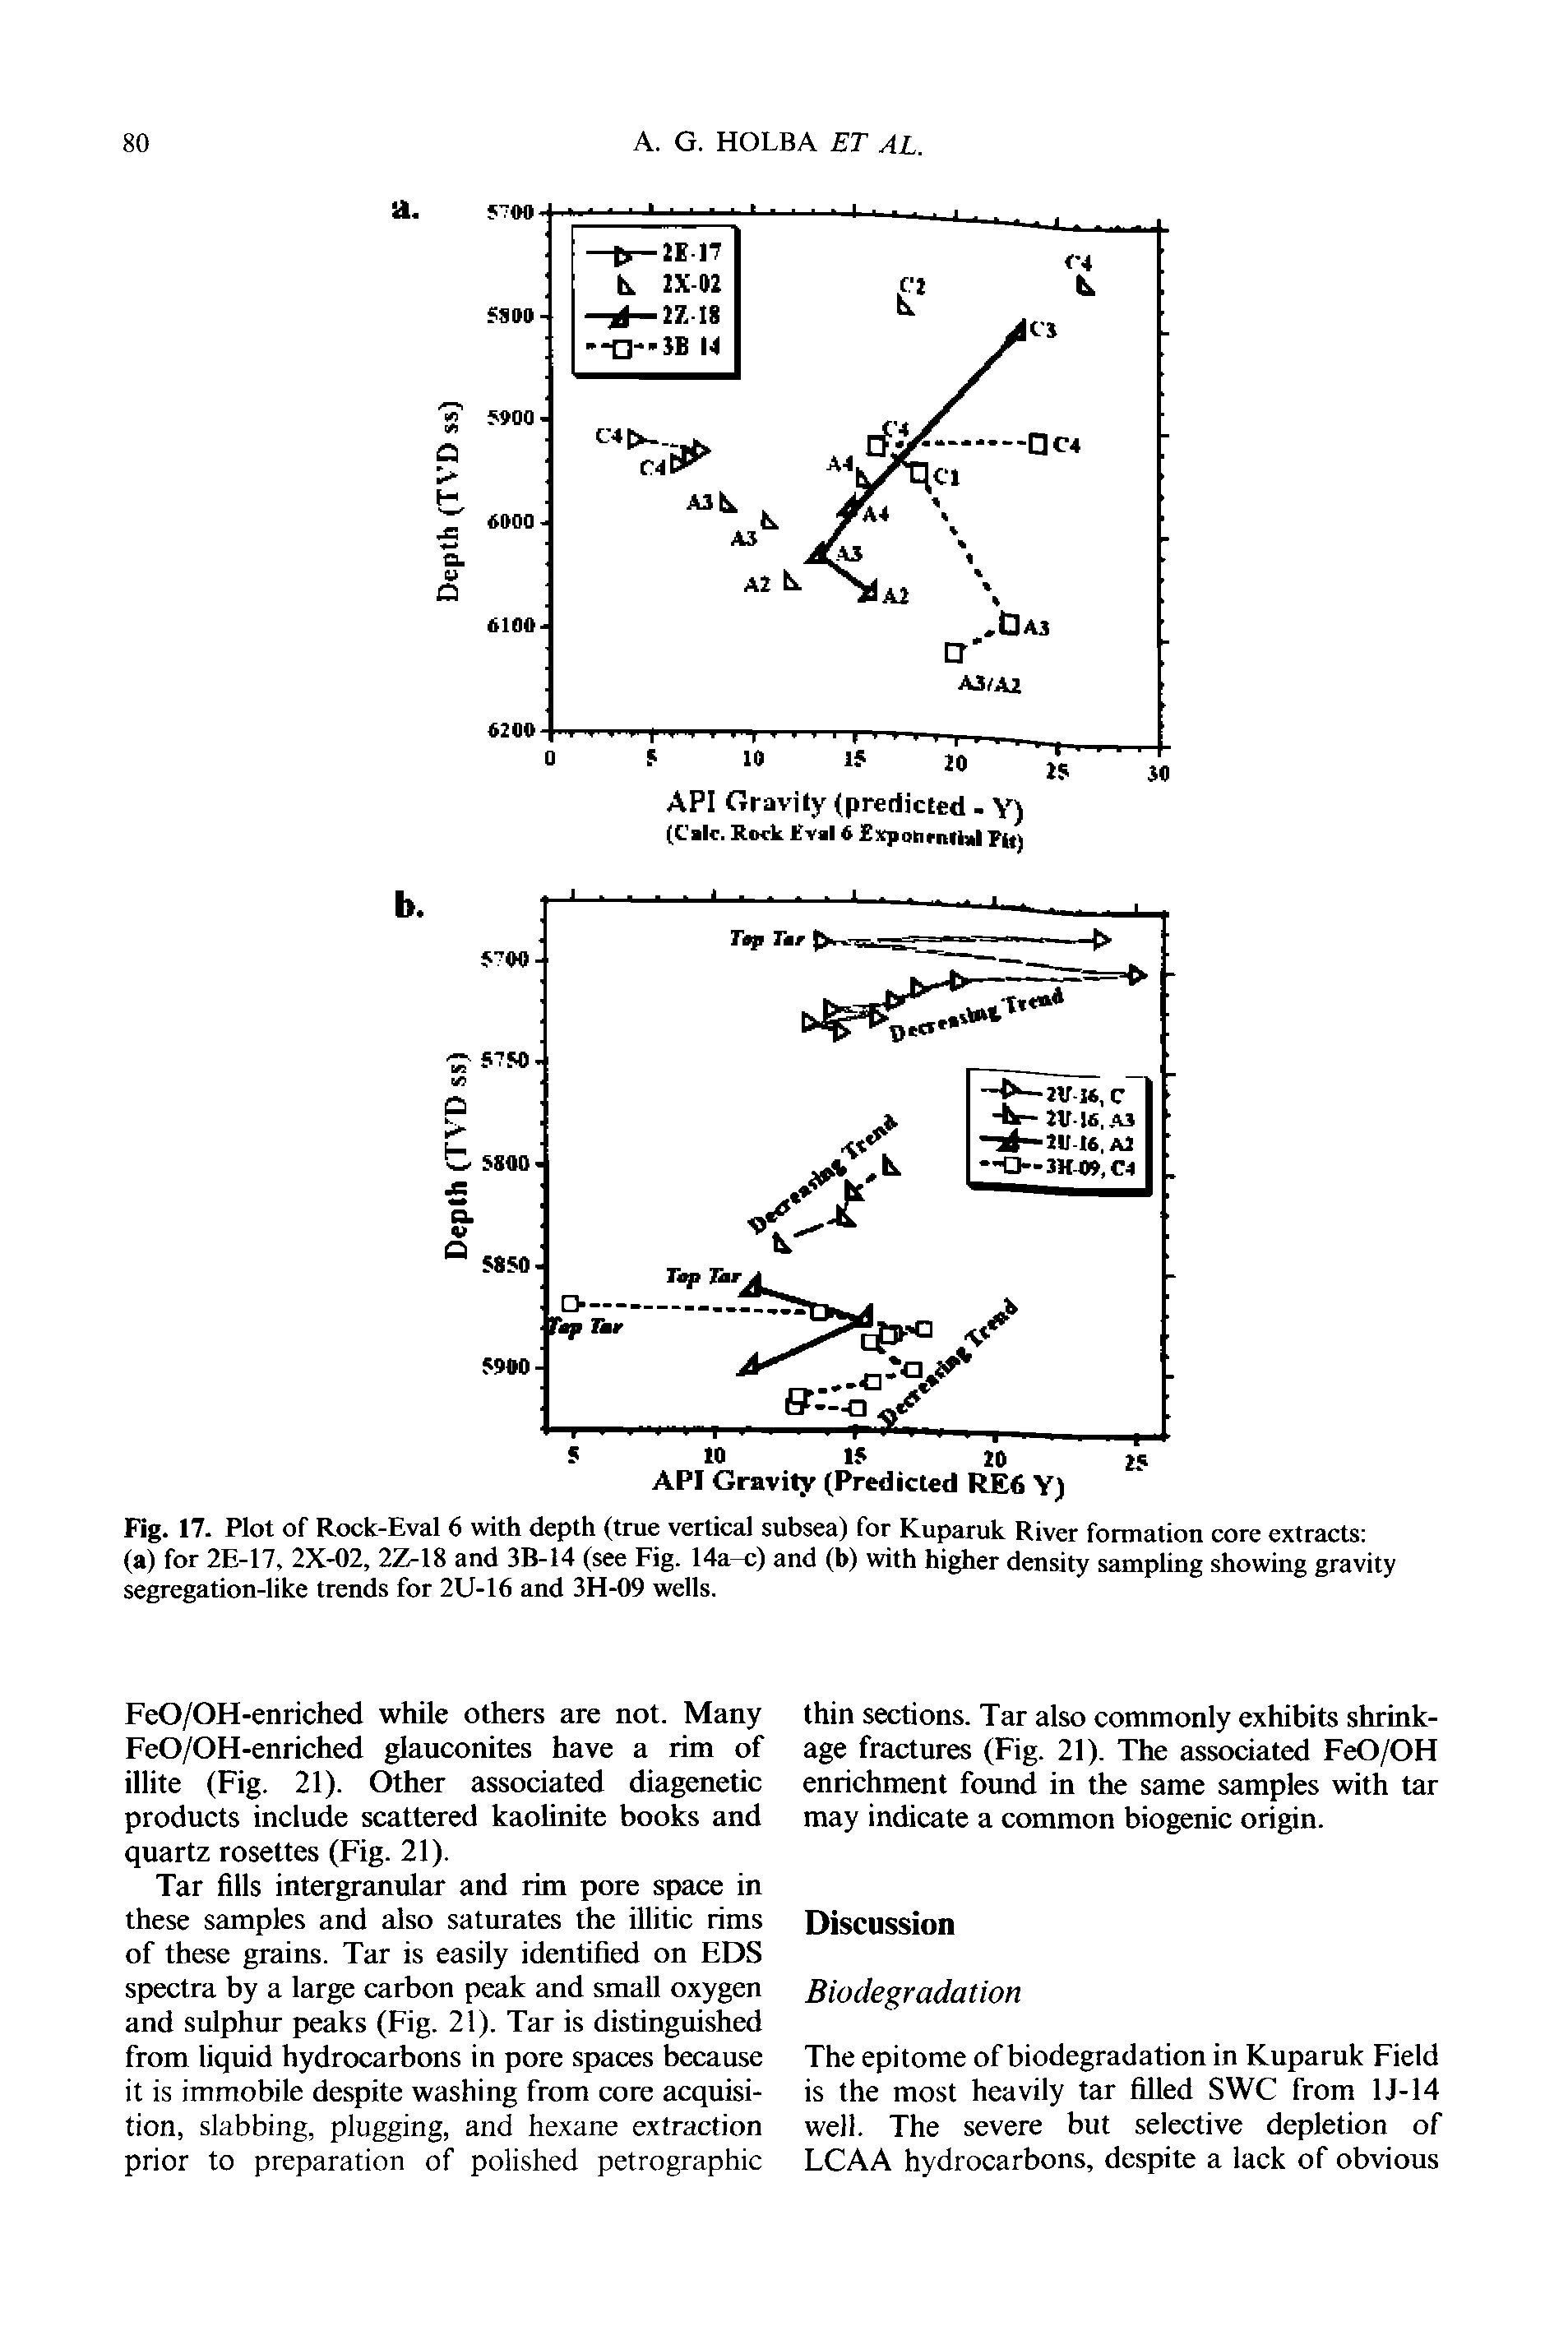 Fig. 17. Plot of Rock-Eval 6 with depth (true vertical subsea) for Kuparuk River formation core extracts (a) for 2E-17. 2X-02, 2Z-18 and 3B-14 (see Fig. 14a—c) and (b) with higher density sampling showing gravity segregation-like trends for 2U-16 and 3H-09 wells.